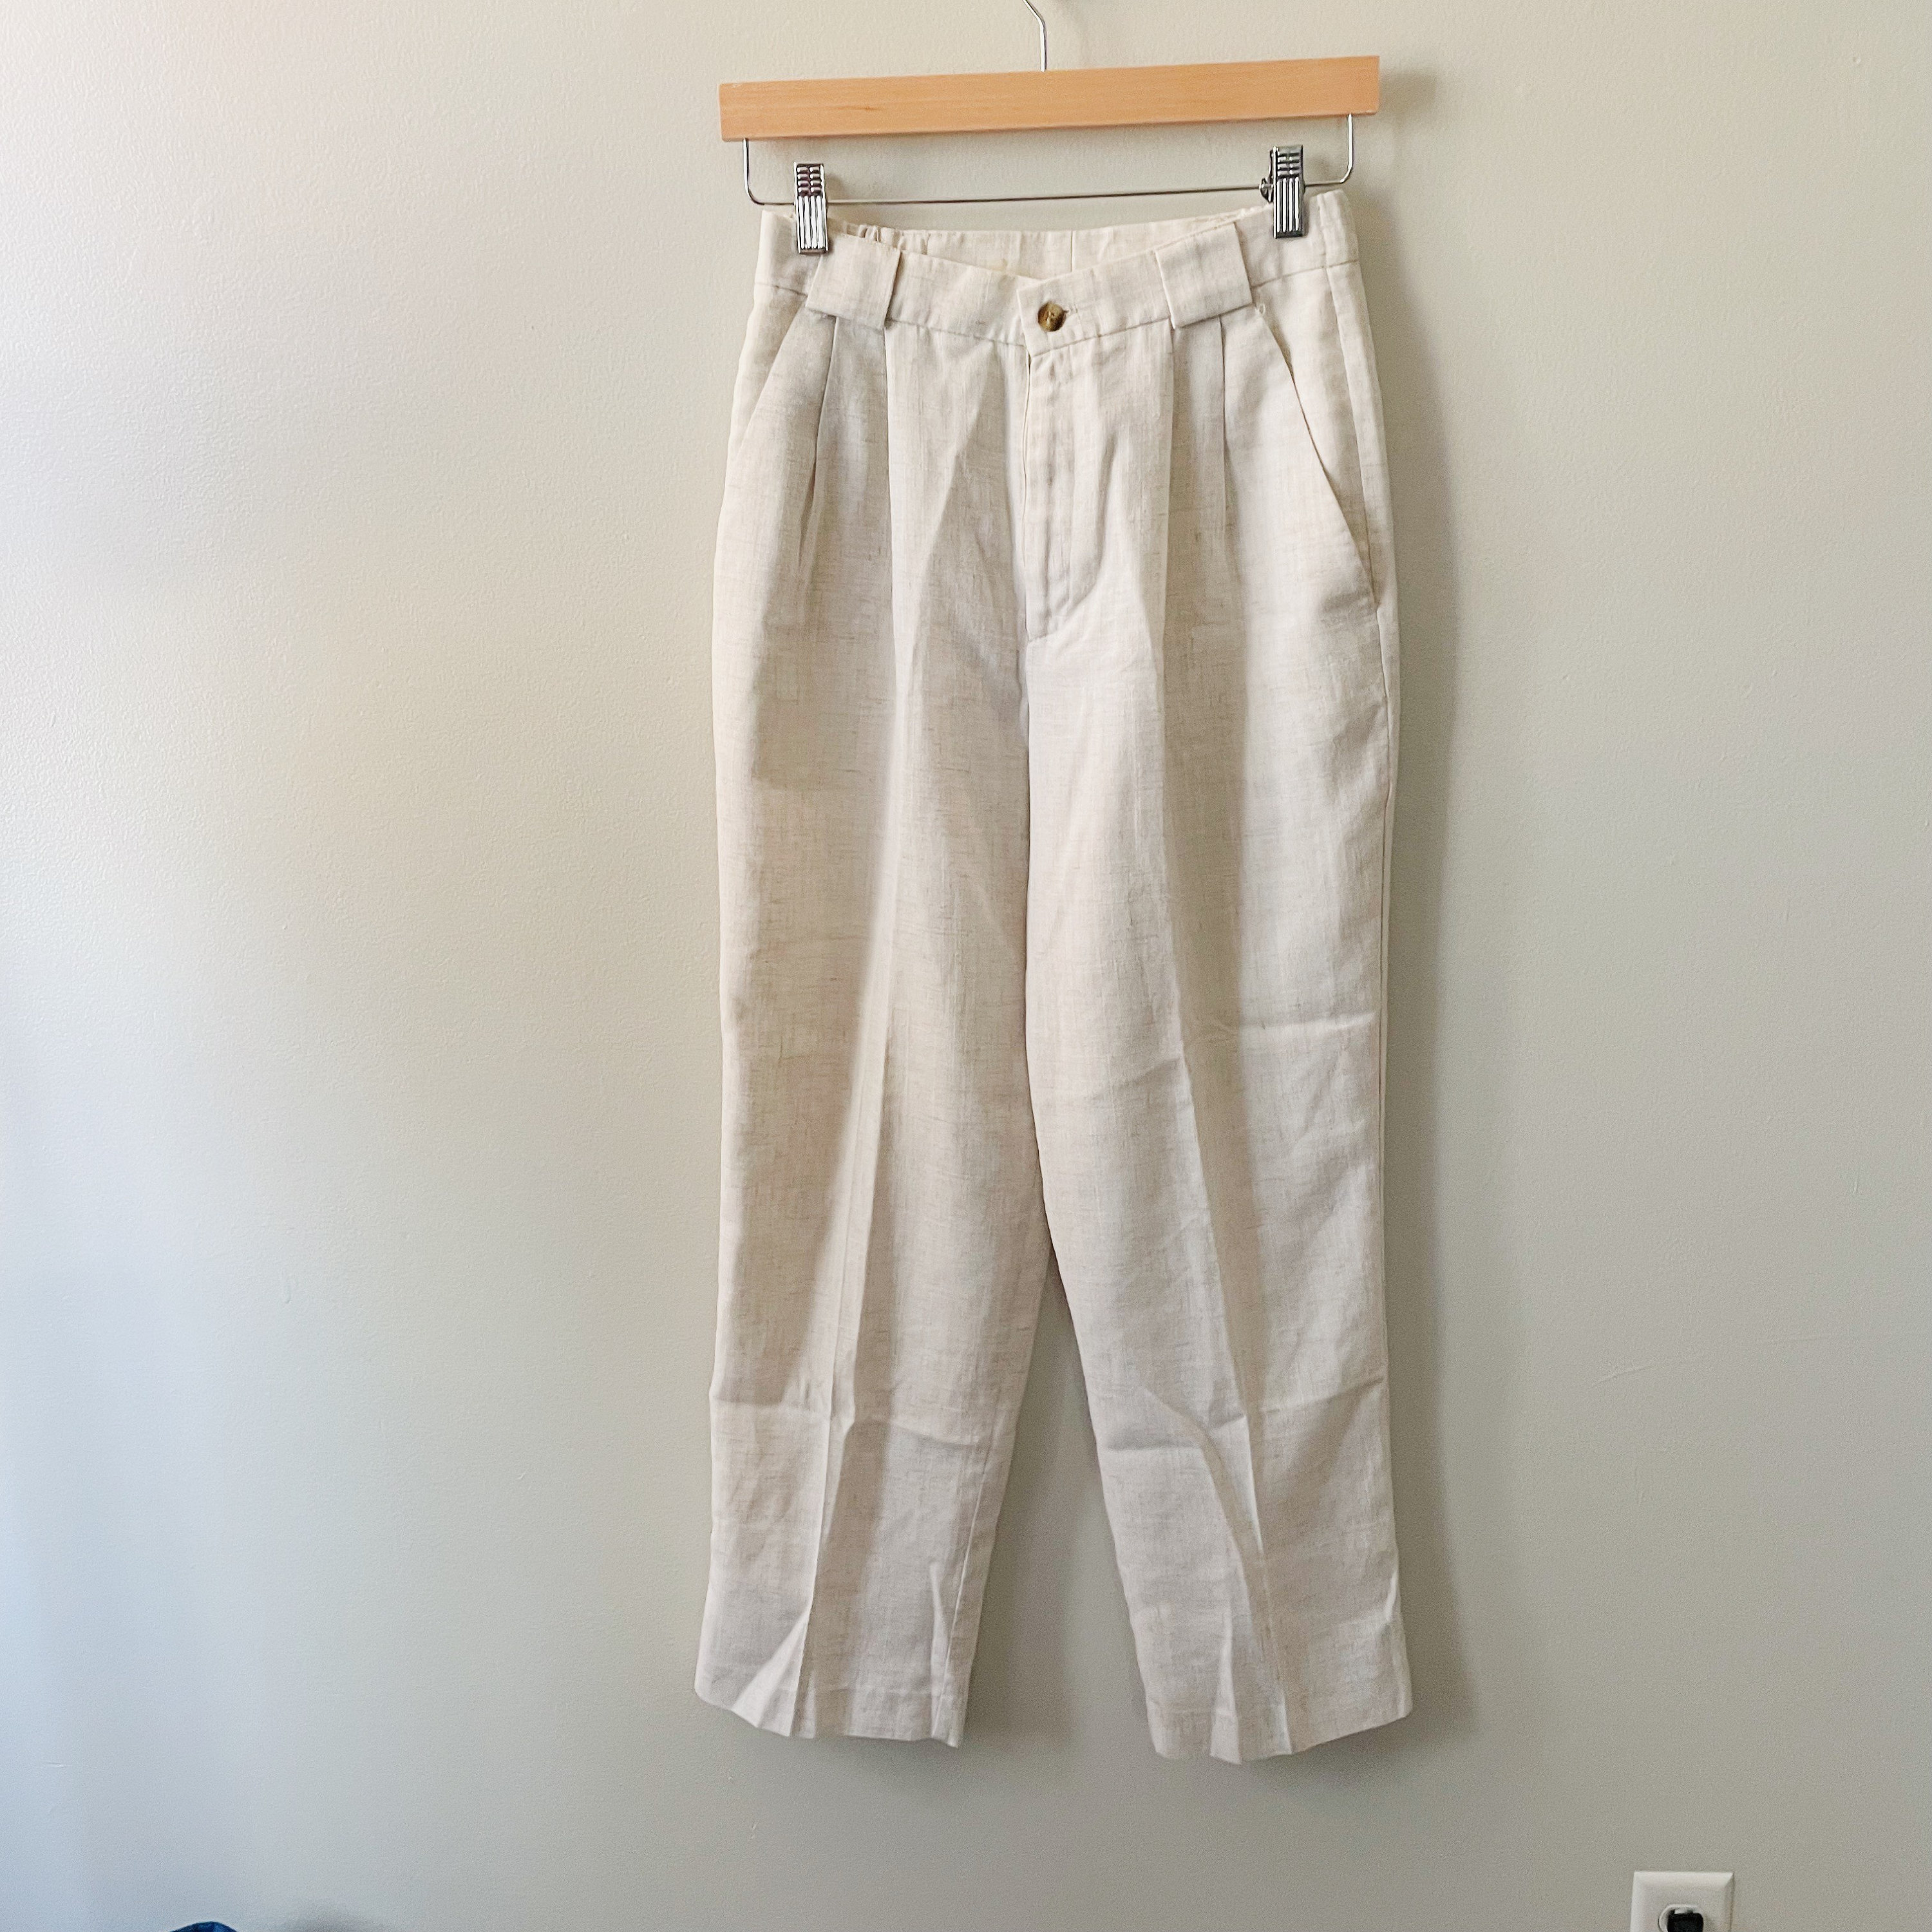 Buy Mens Short pants Online  Comfortable Stylish  Practical  Ramraj  Cotton